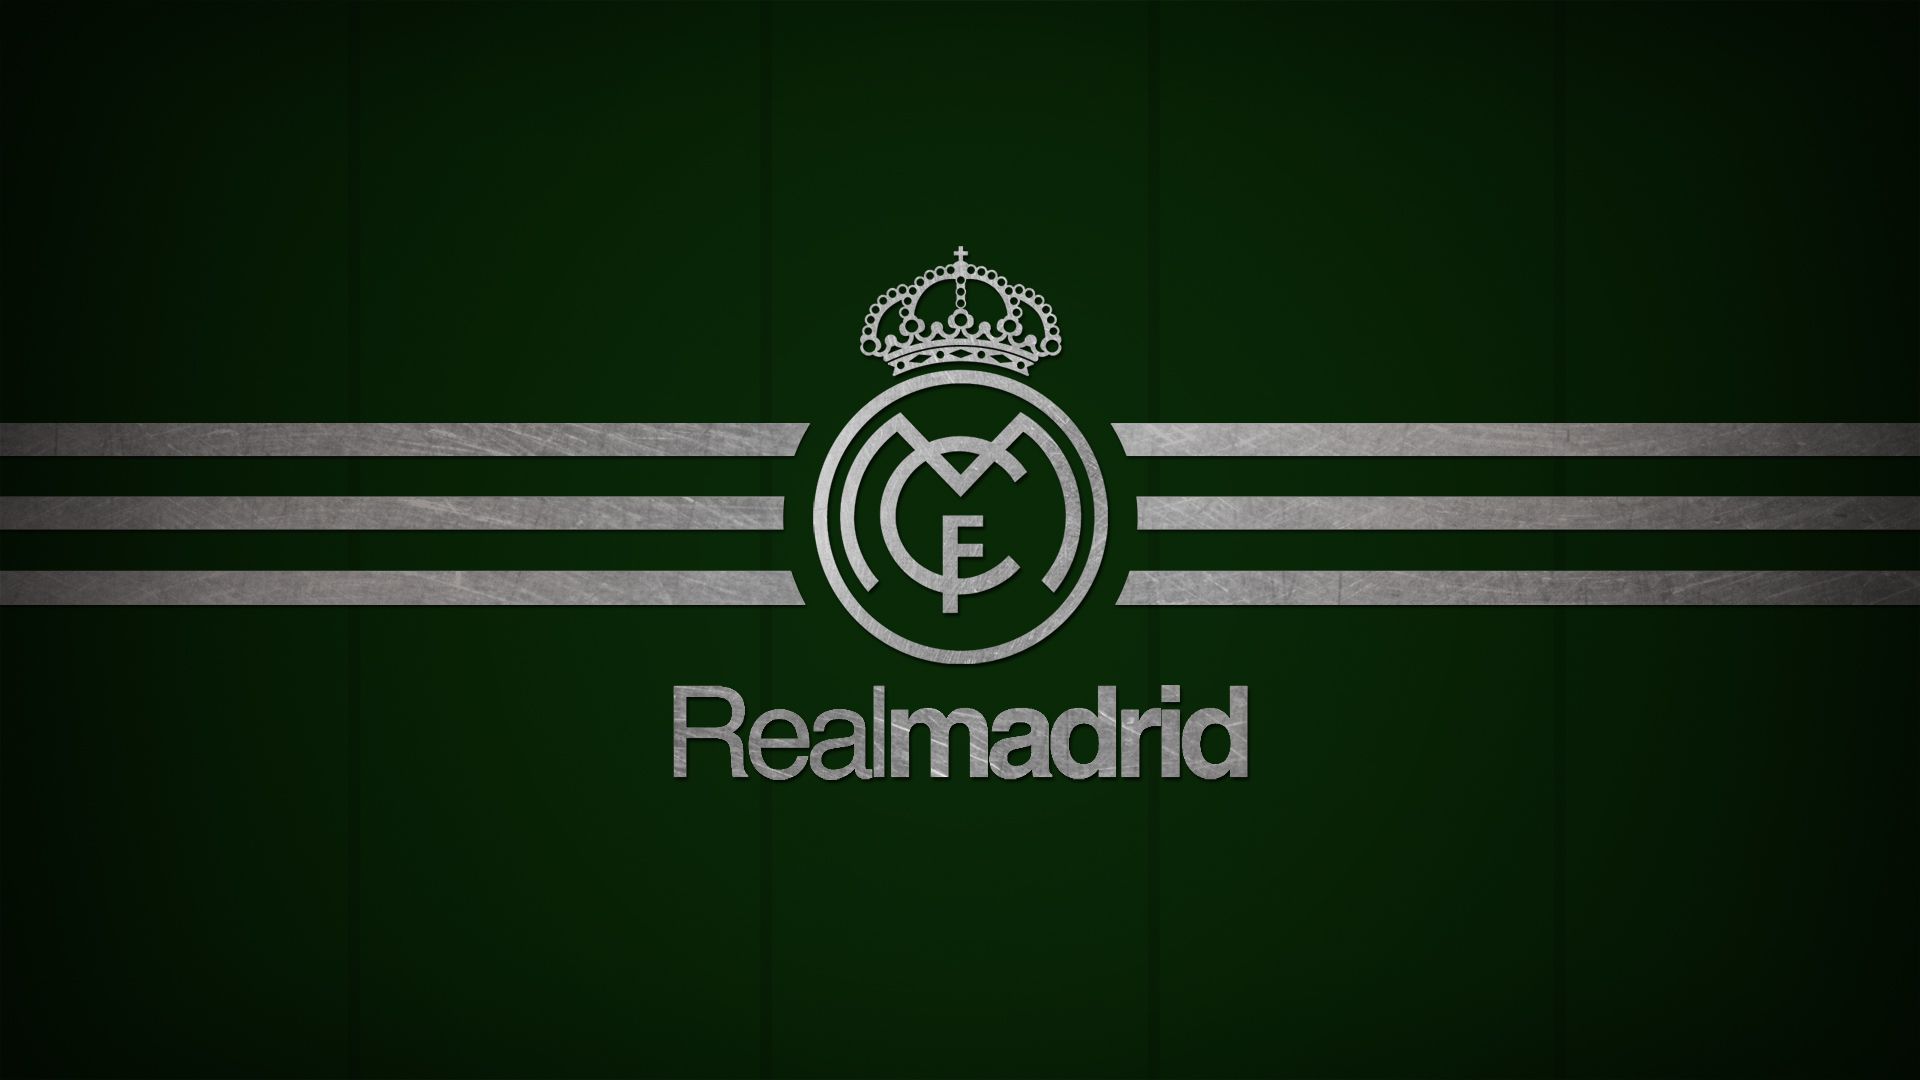 Real Madrid #850635 | Full HD Widescreen wallpapers for desktop ...